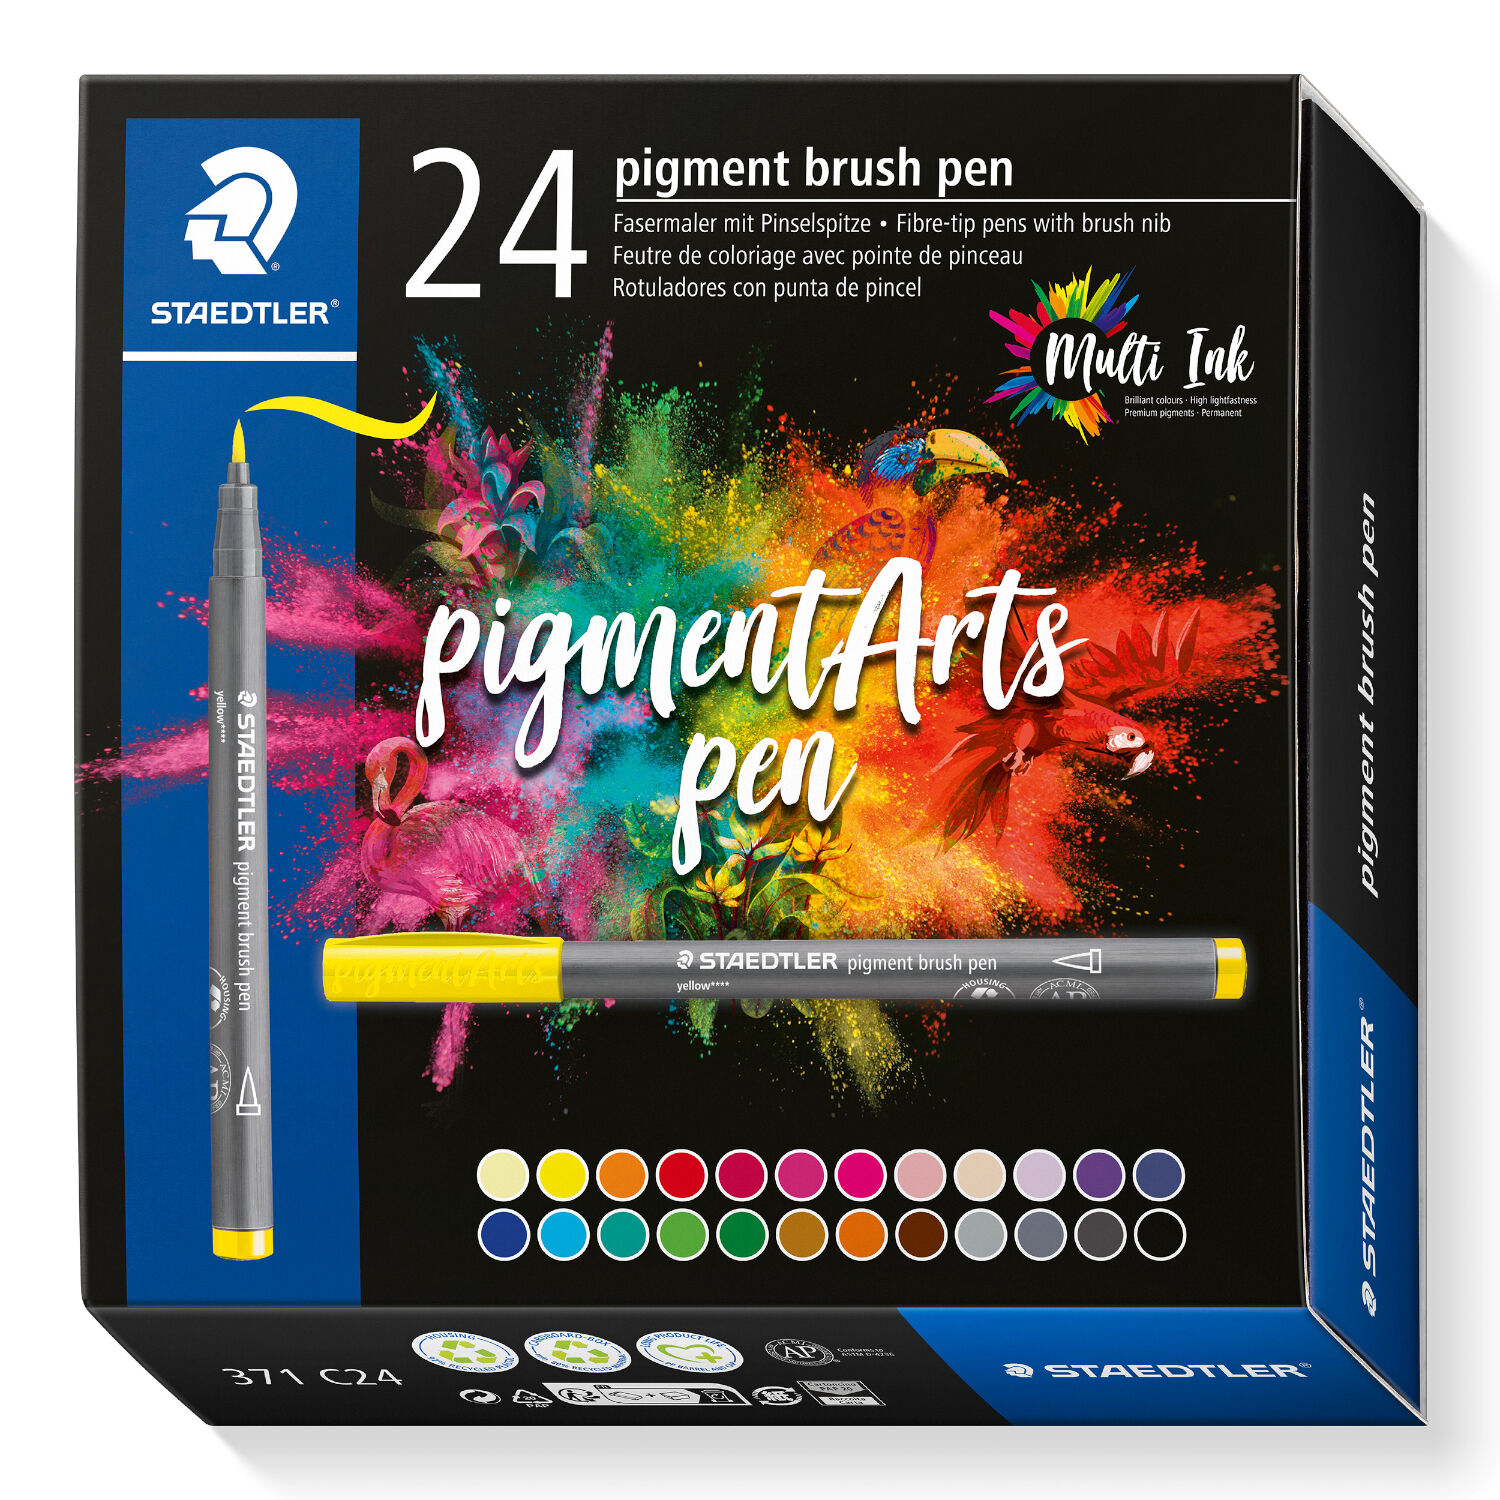 NEU Staedtler Pigment Brush Pen Set, 24 Stifte